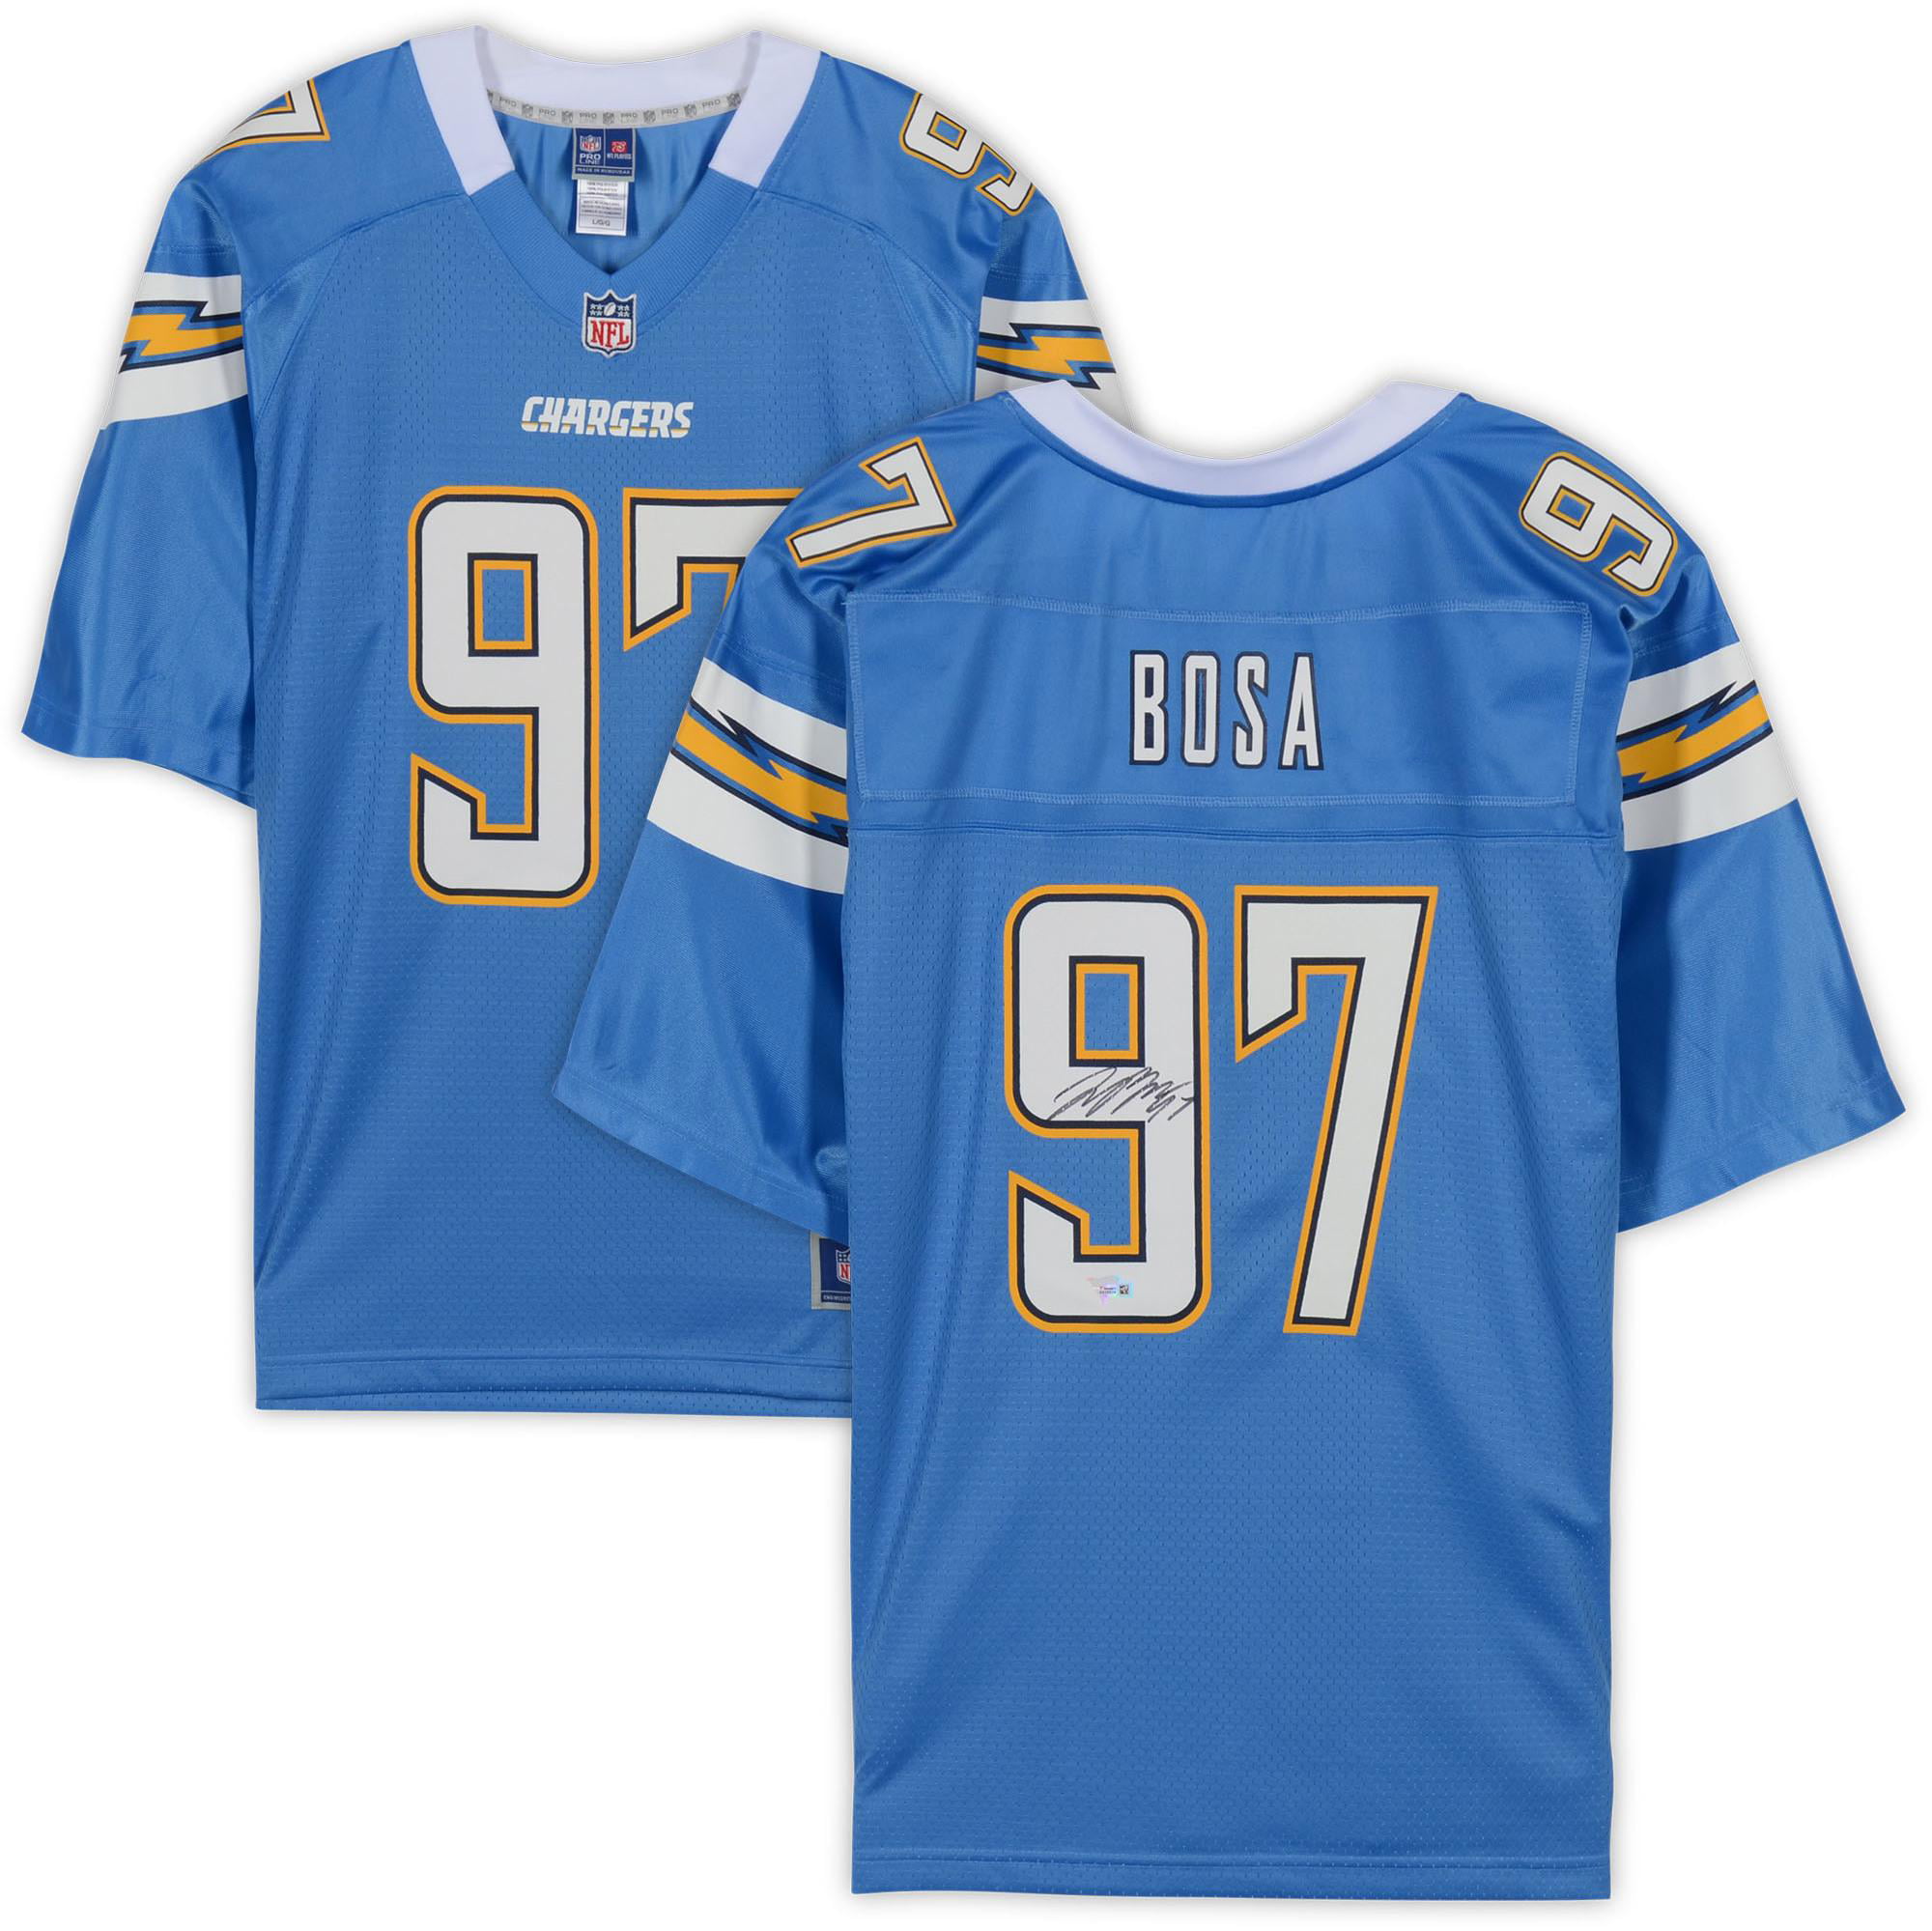 Joey Bosa Los Angeles Chargers Autographed NFL Pro-Line Powder Blue Replica Jersey - Fanatics Authentic Certified - Walmart.com